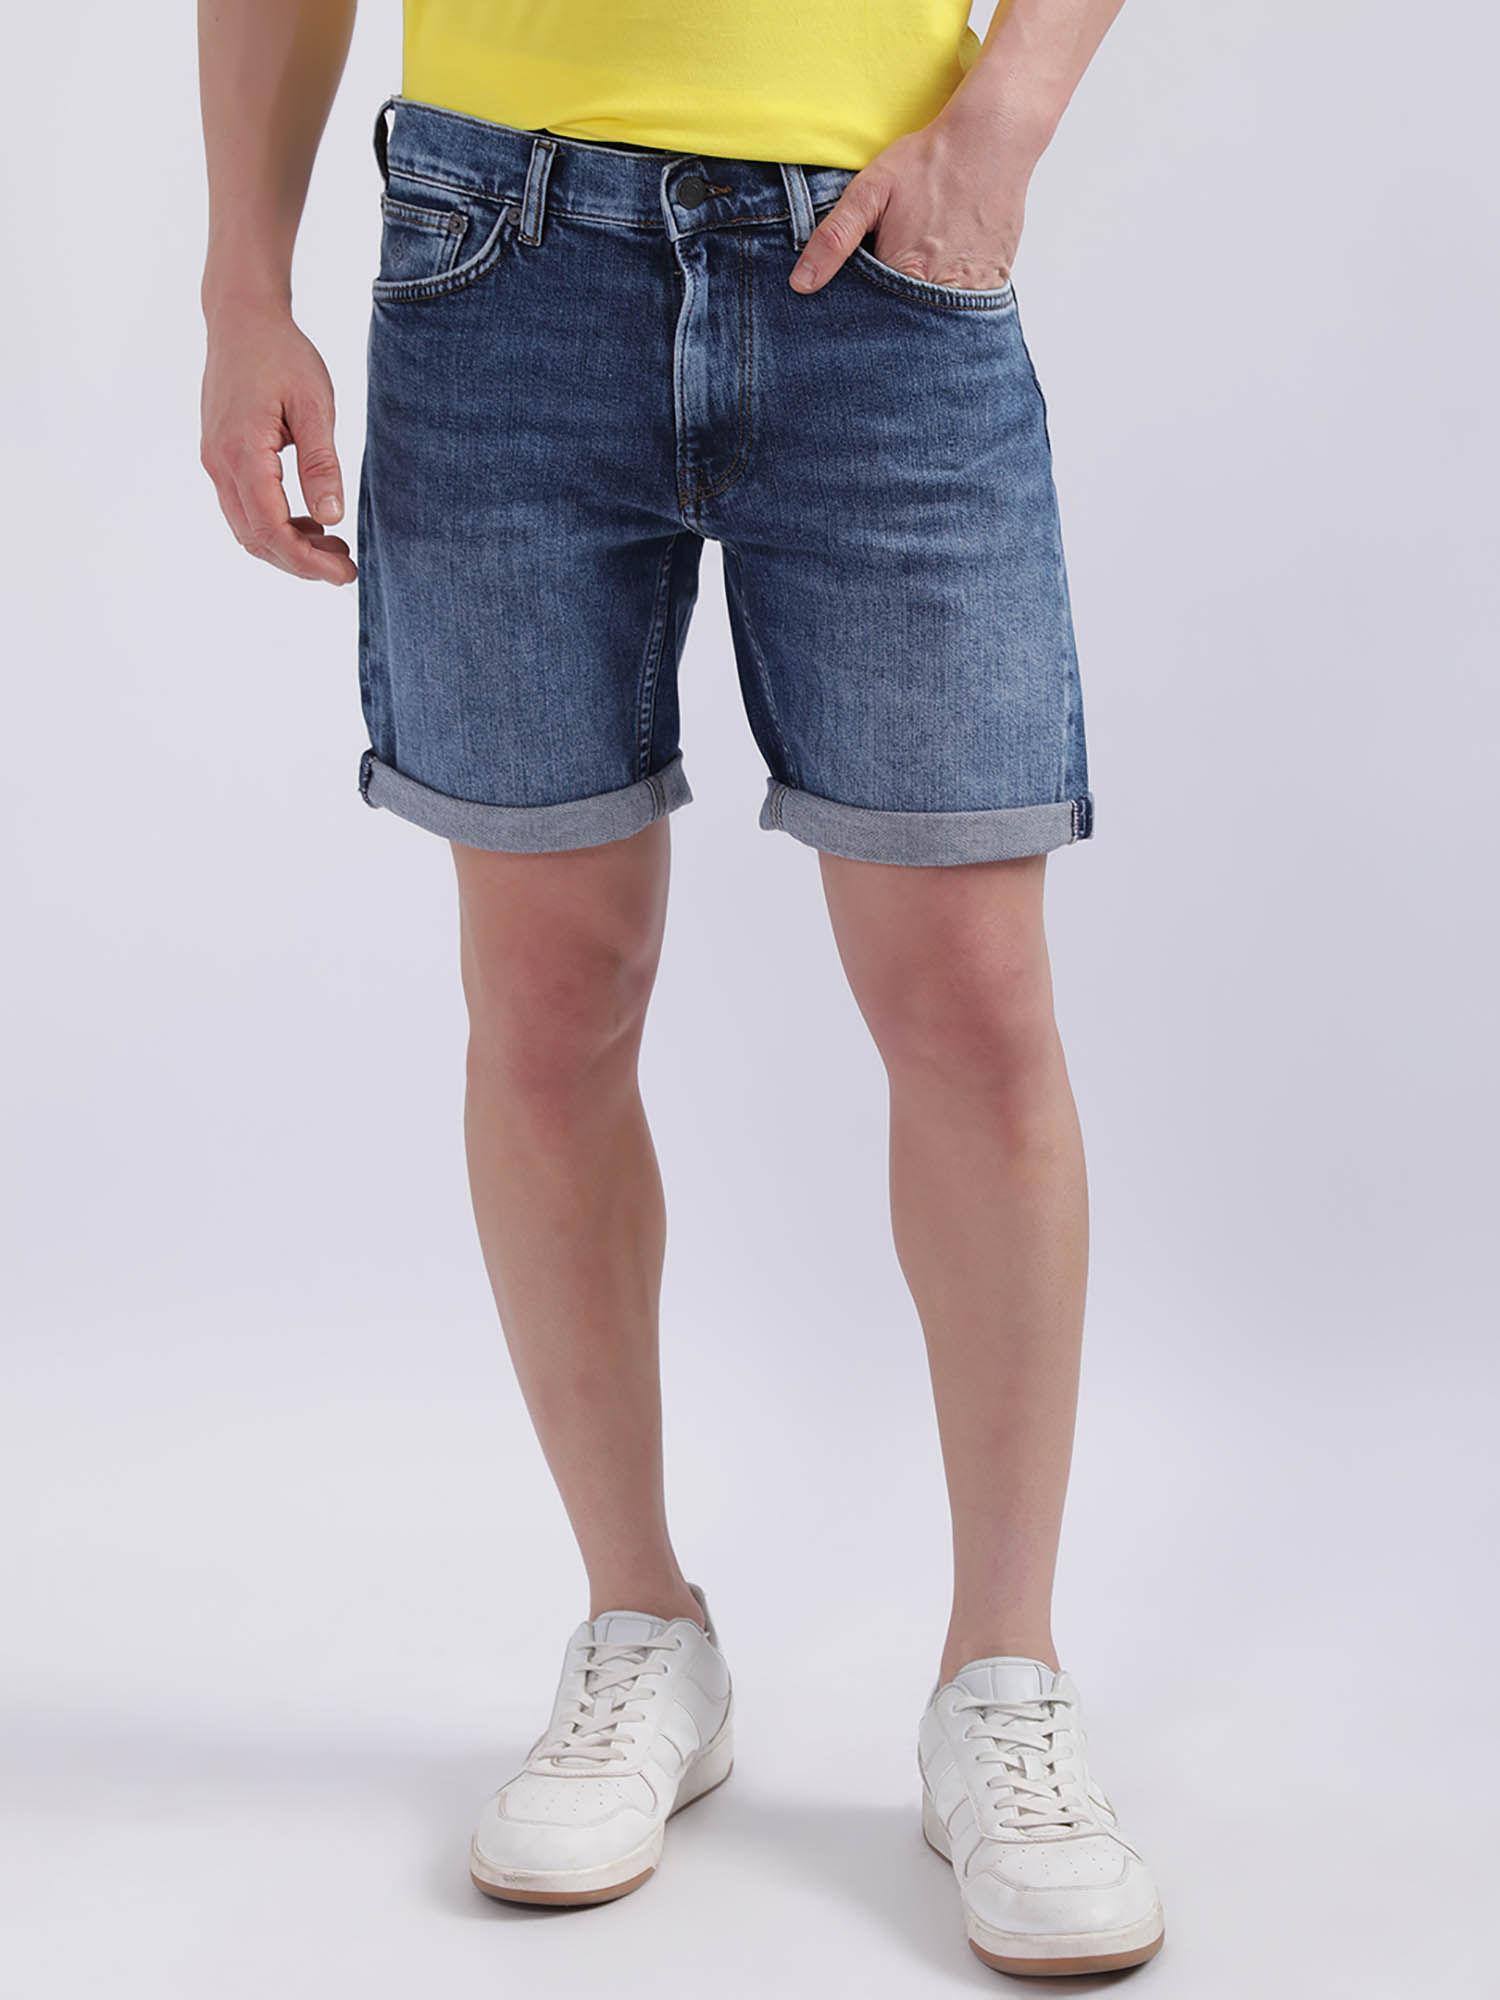 mens solid blue shorts